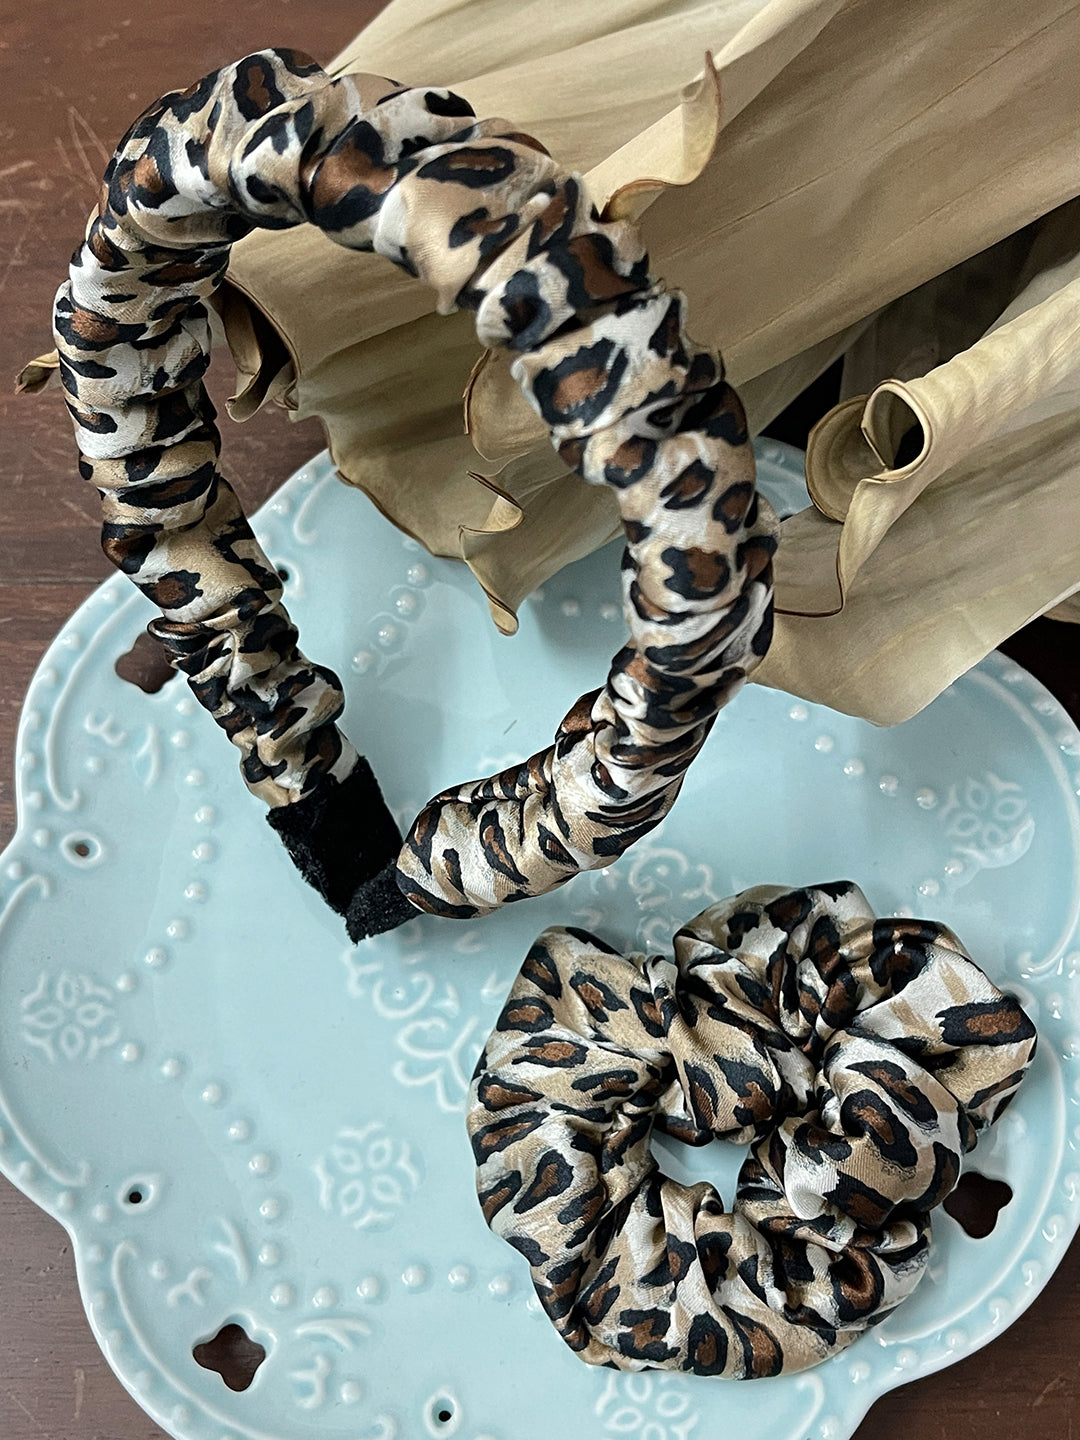 Ayesha Set Of Two Leopard Animal Printed Satin Scrunchie Hair Tie & Hair Band